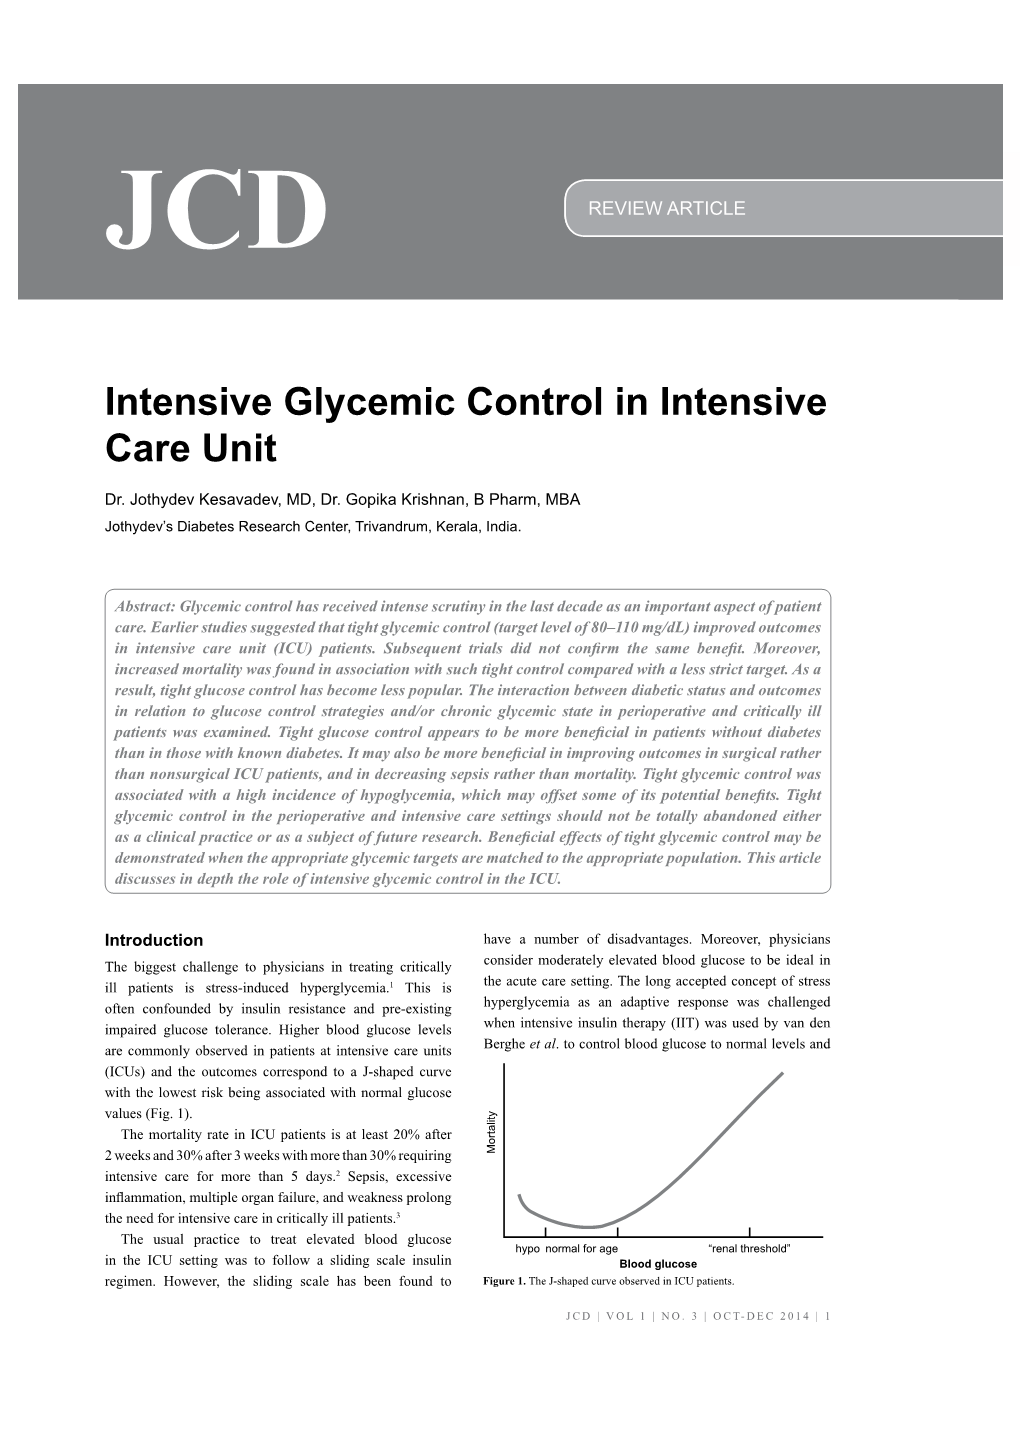 Intensive Glycemic Control in Intensive Care Unit